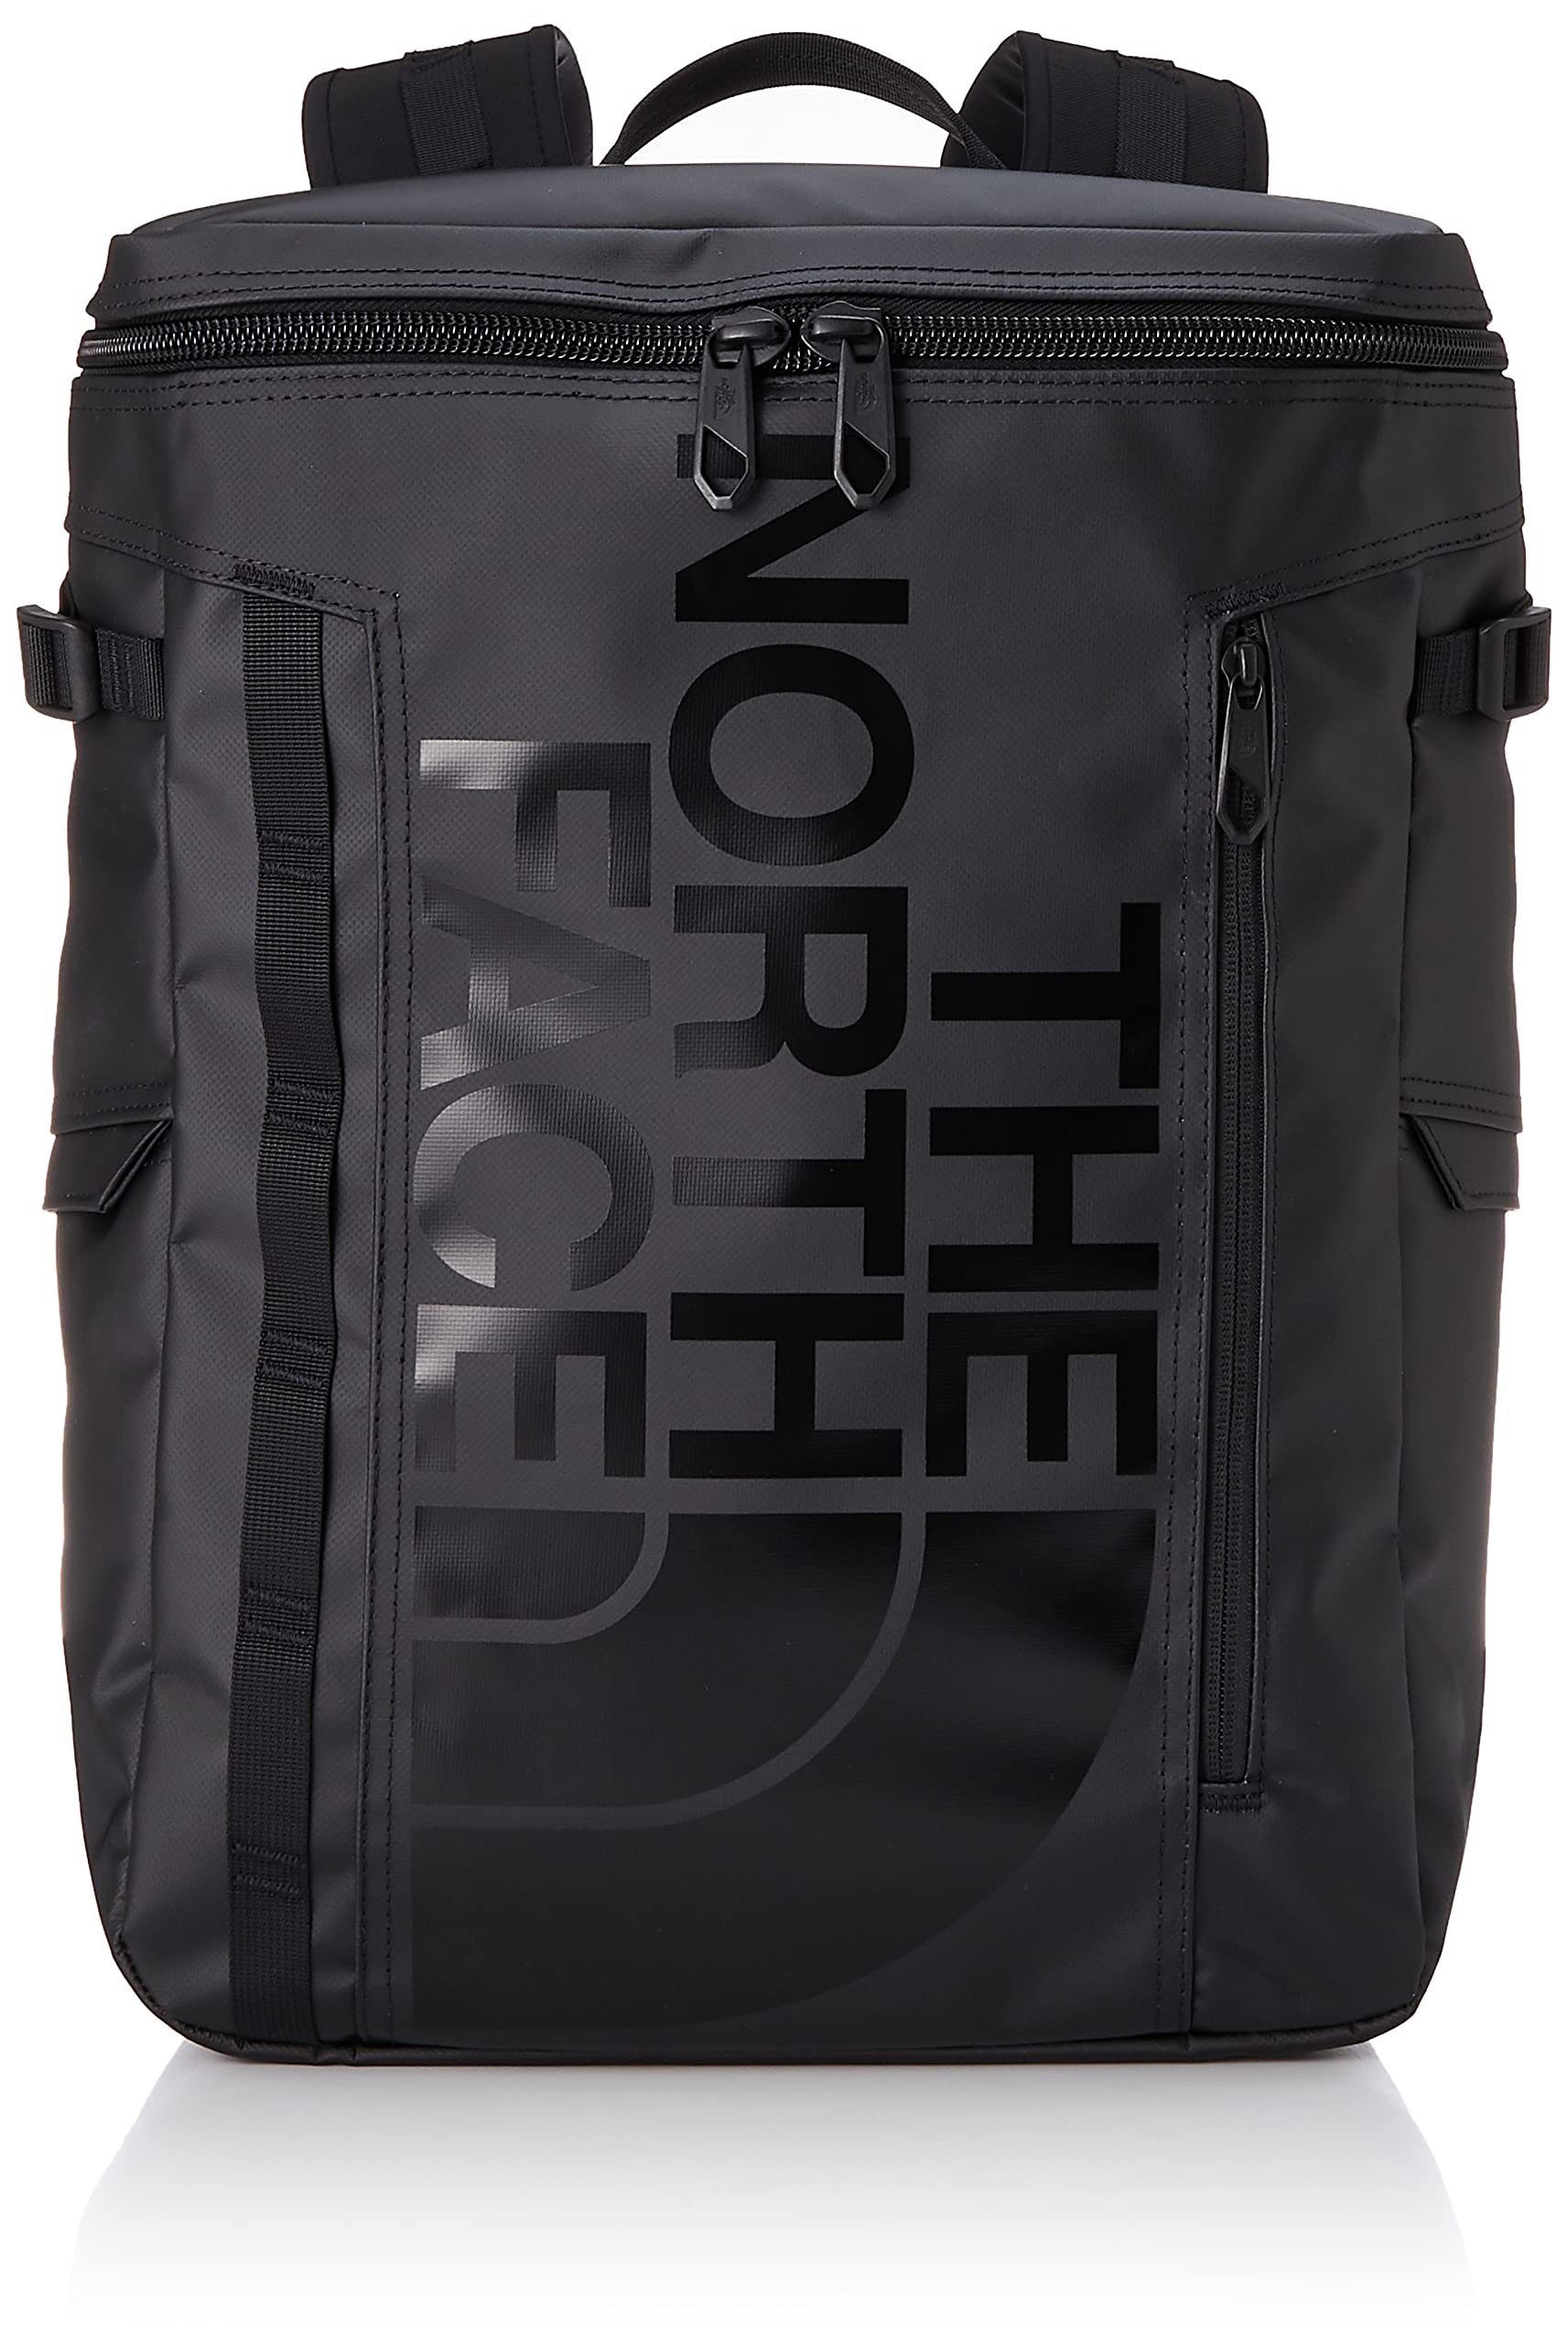 The North Face NM82255 BC Fuse Box II Backpack / Bag, black (black 19-3911tcx), Free Size